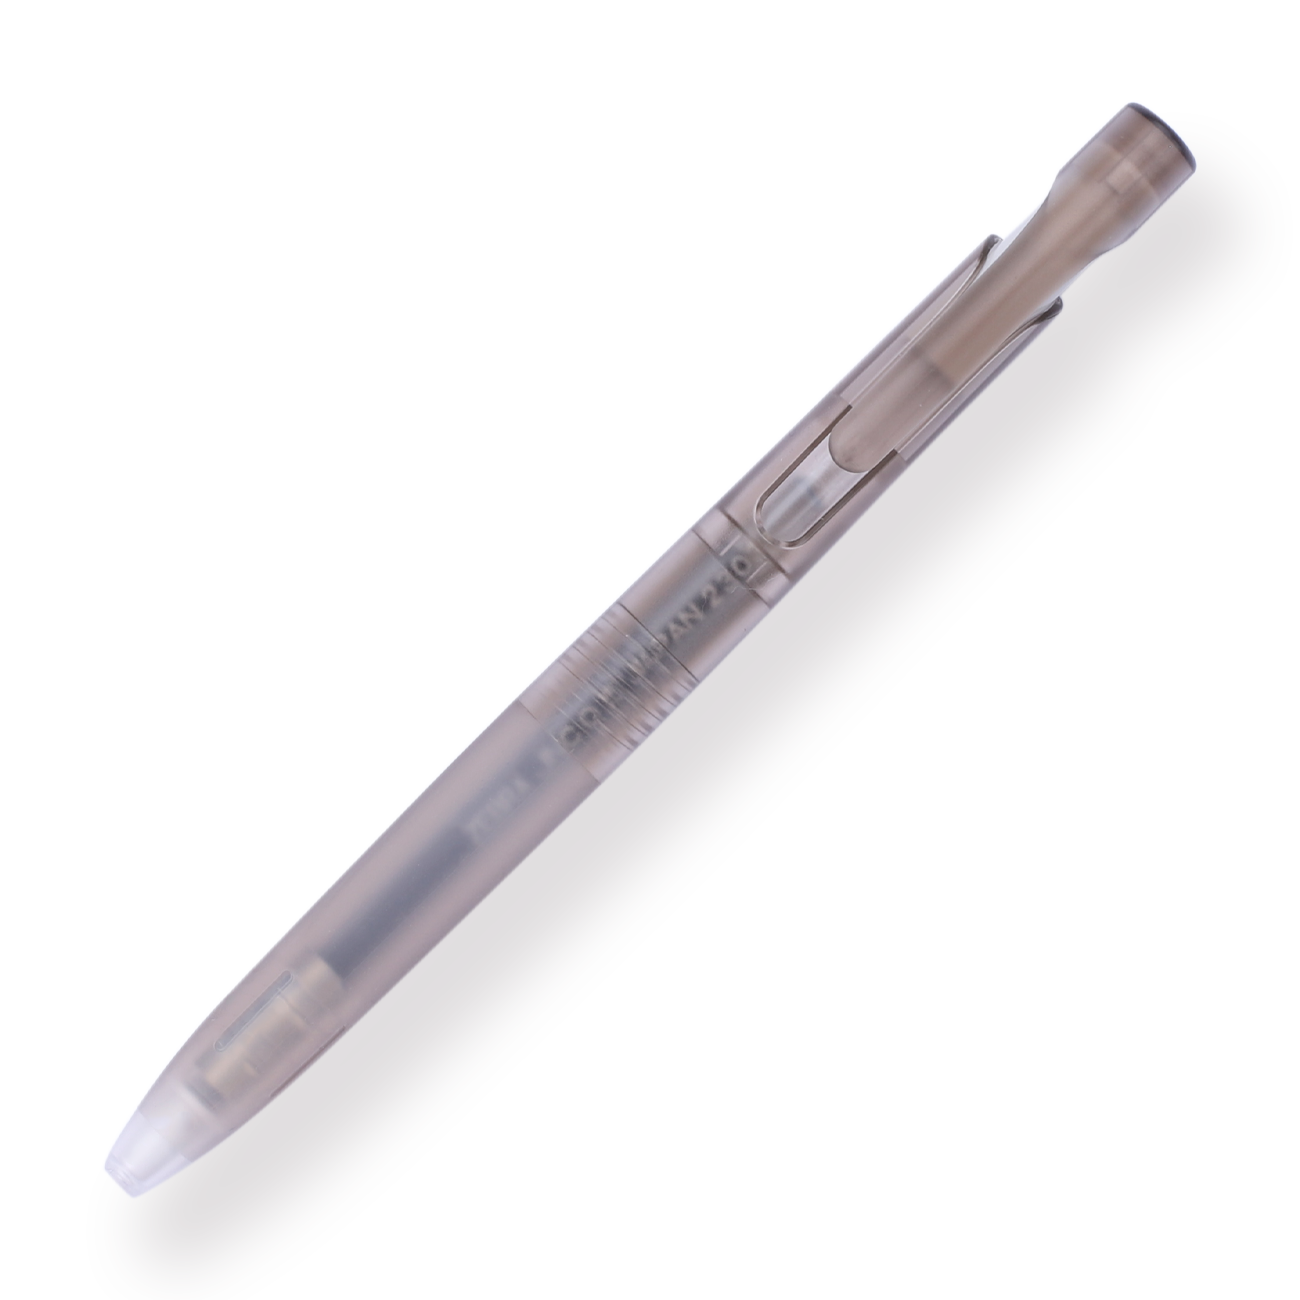 Zebra Blen Limited Edition Retractable Gel Pen - The Clear Nuance Color - Chocolate